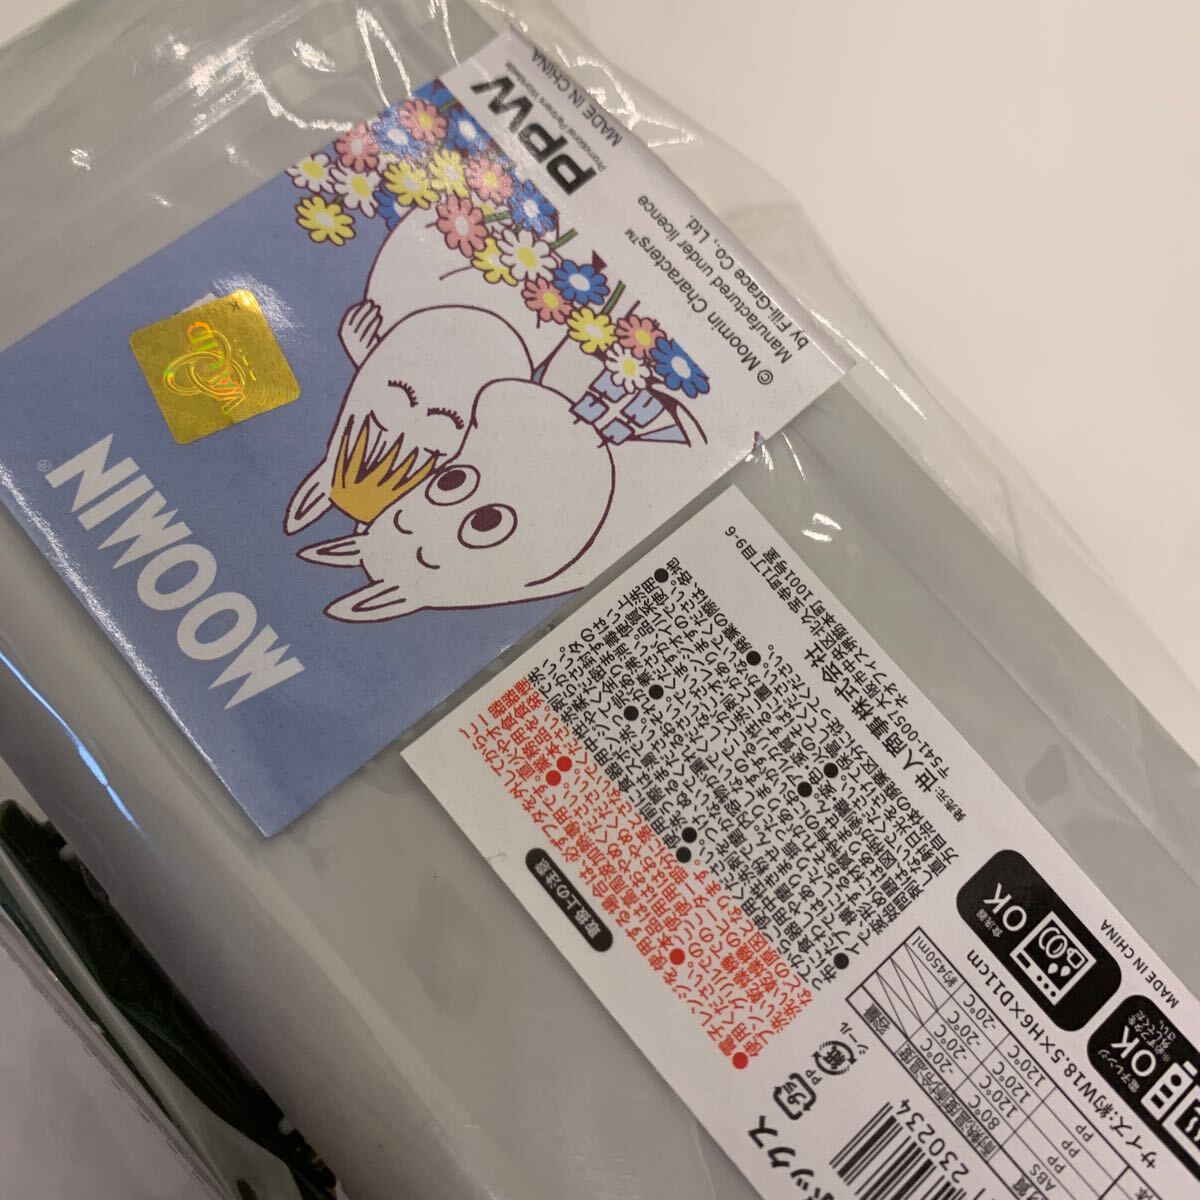  Moomin lunch box lunch box free shipping ②